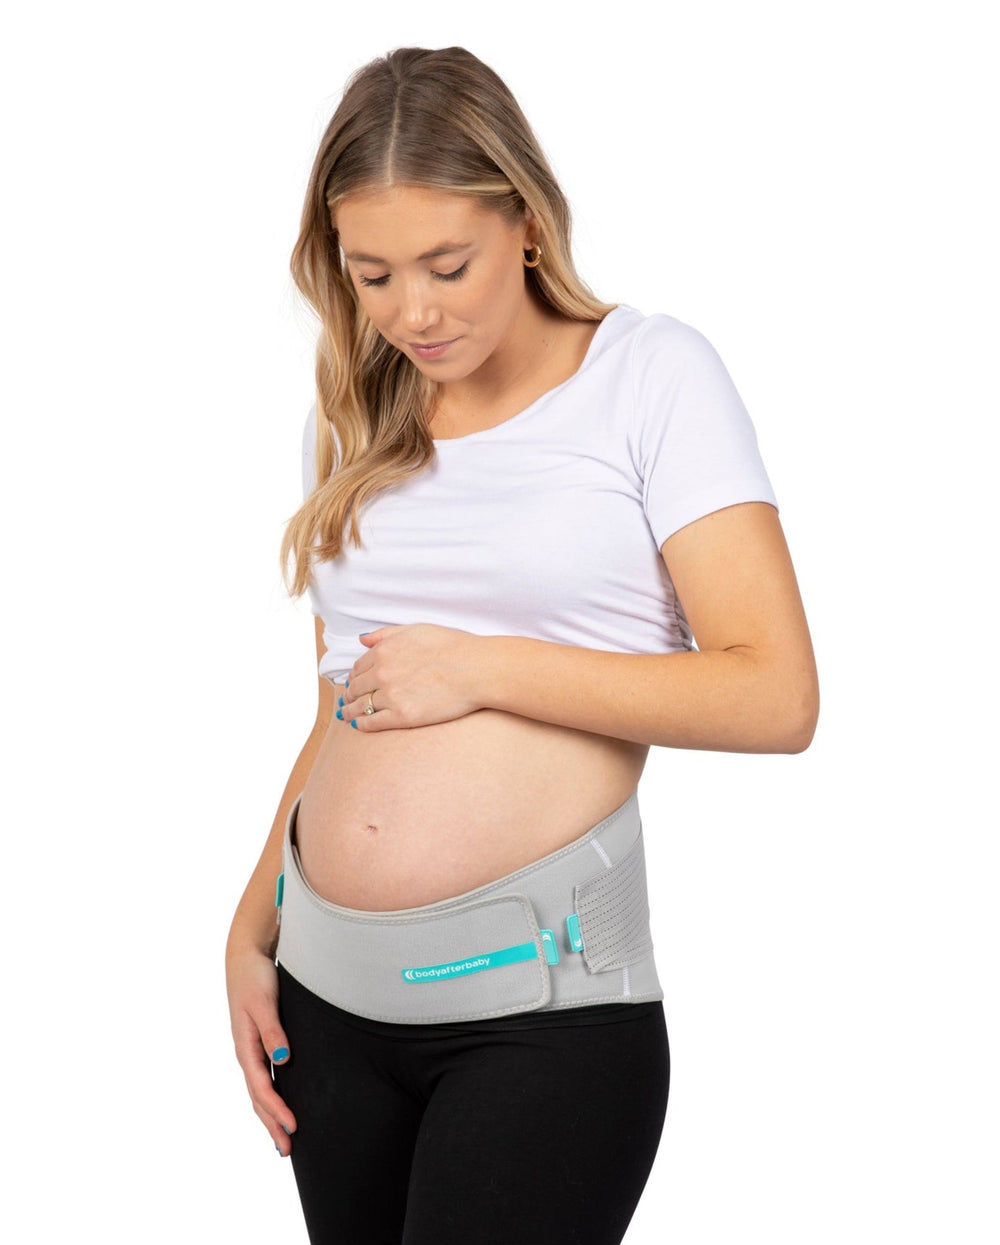 NINER Premium Pregnancy Support